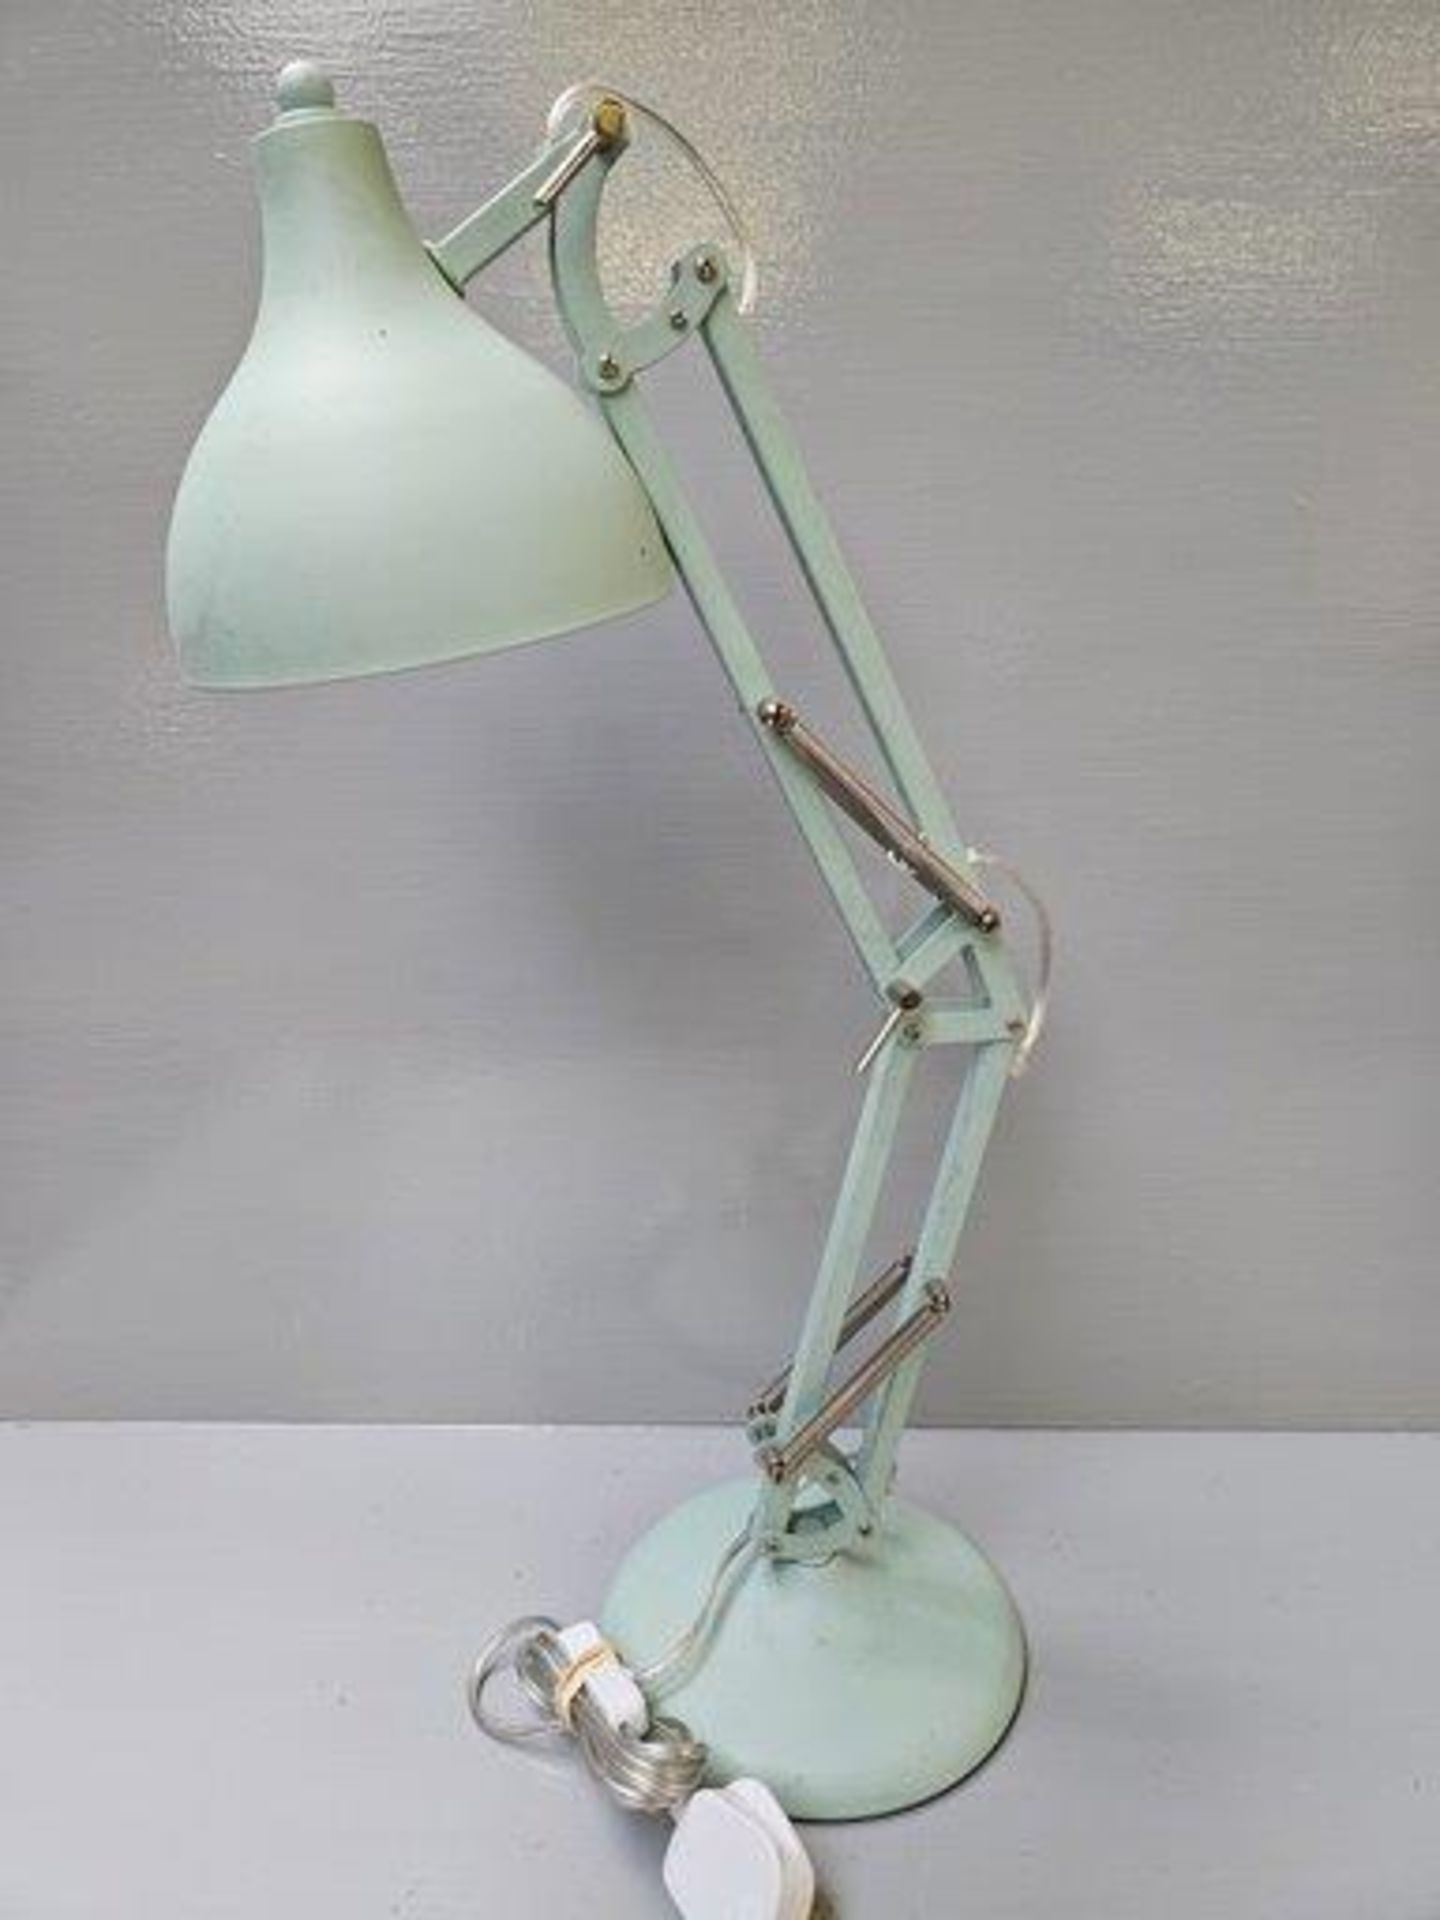 Angle Poise Lamp - Image 2 of 2